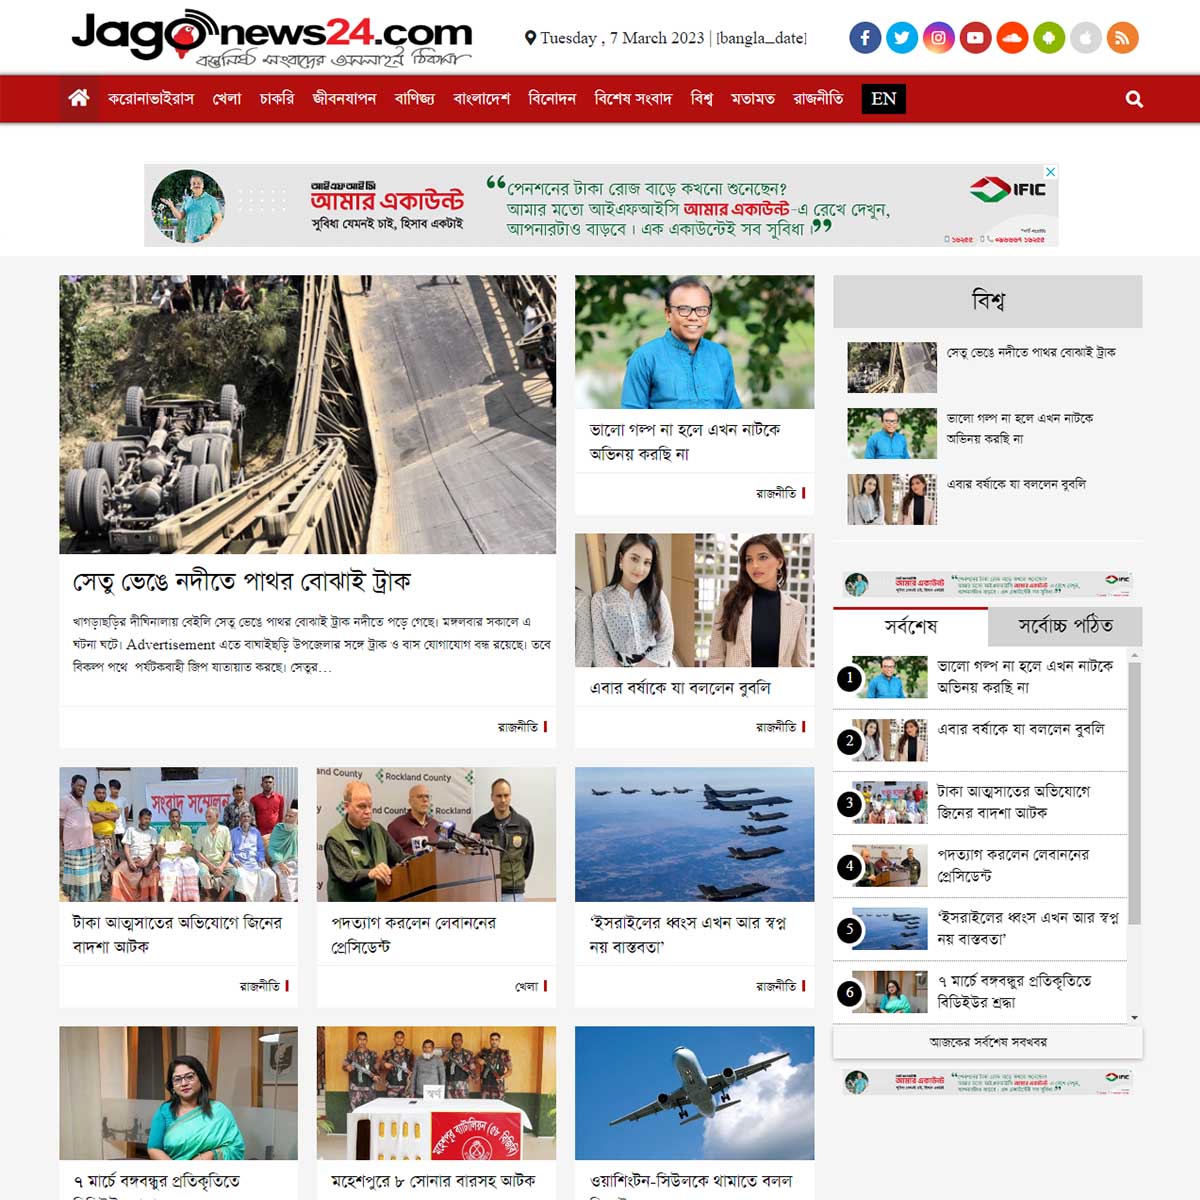 WordPress News Theme (Jago News Paper)